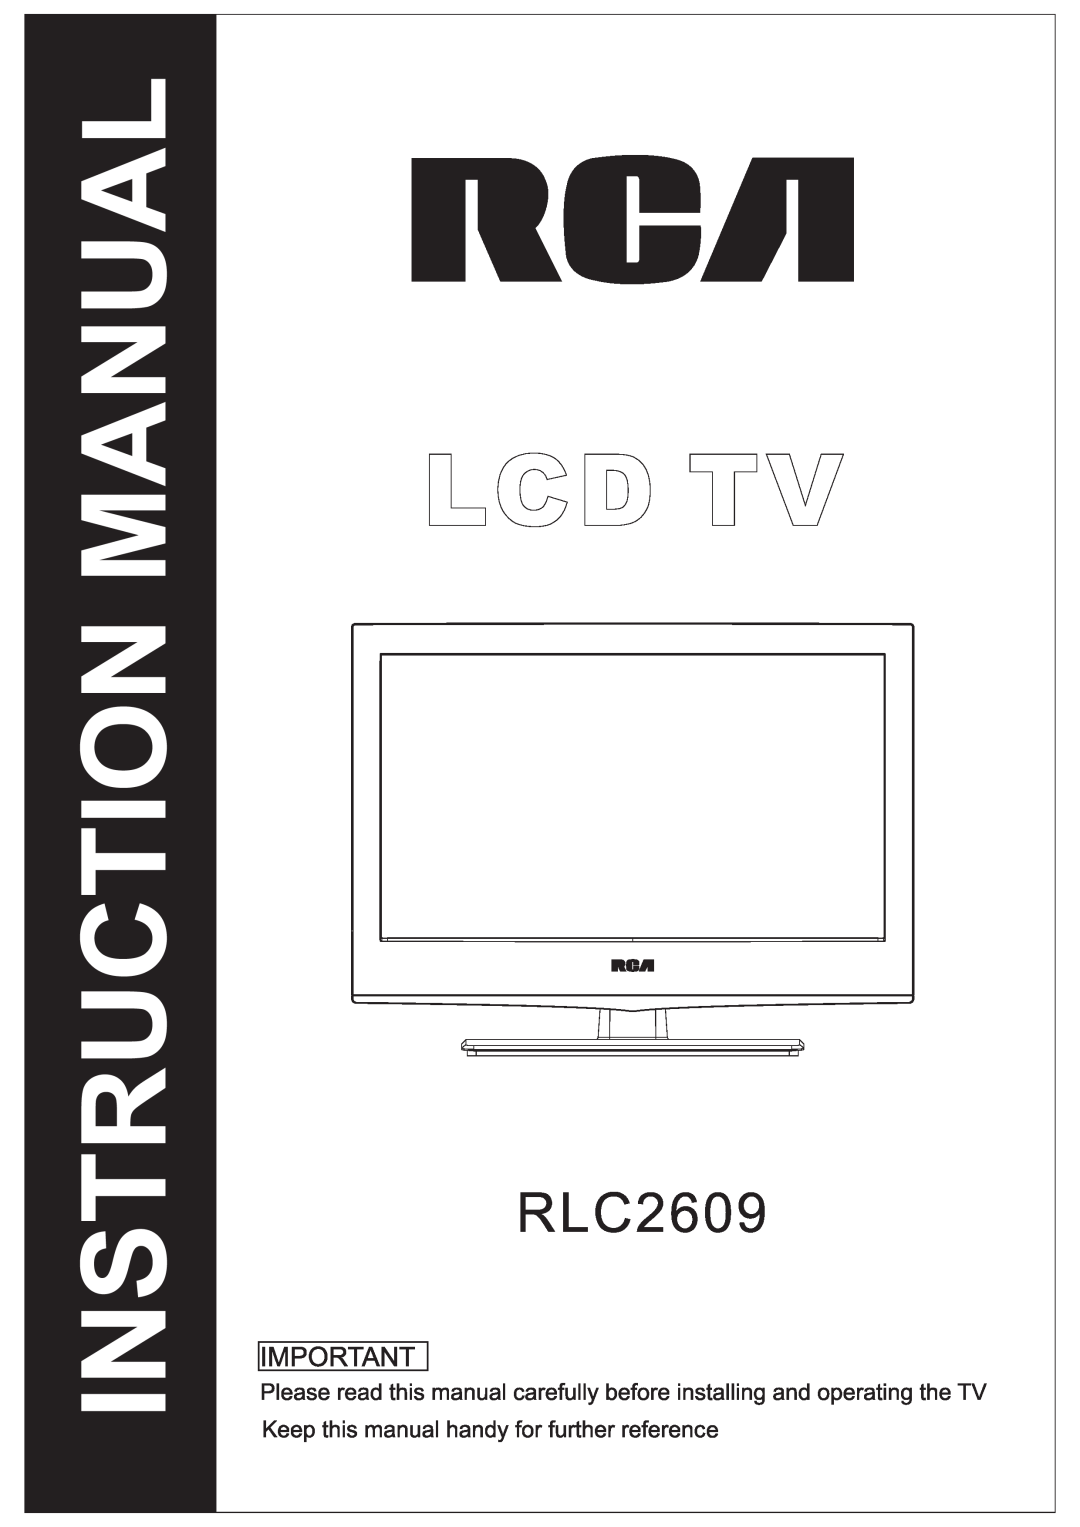 RCA RLC2609 instruction manual Lcd Tv, Instruction Manual 